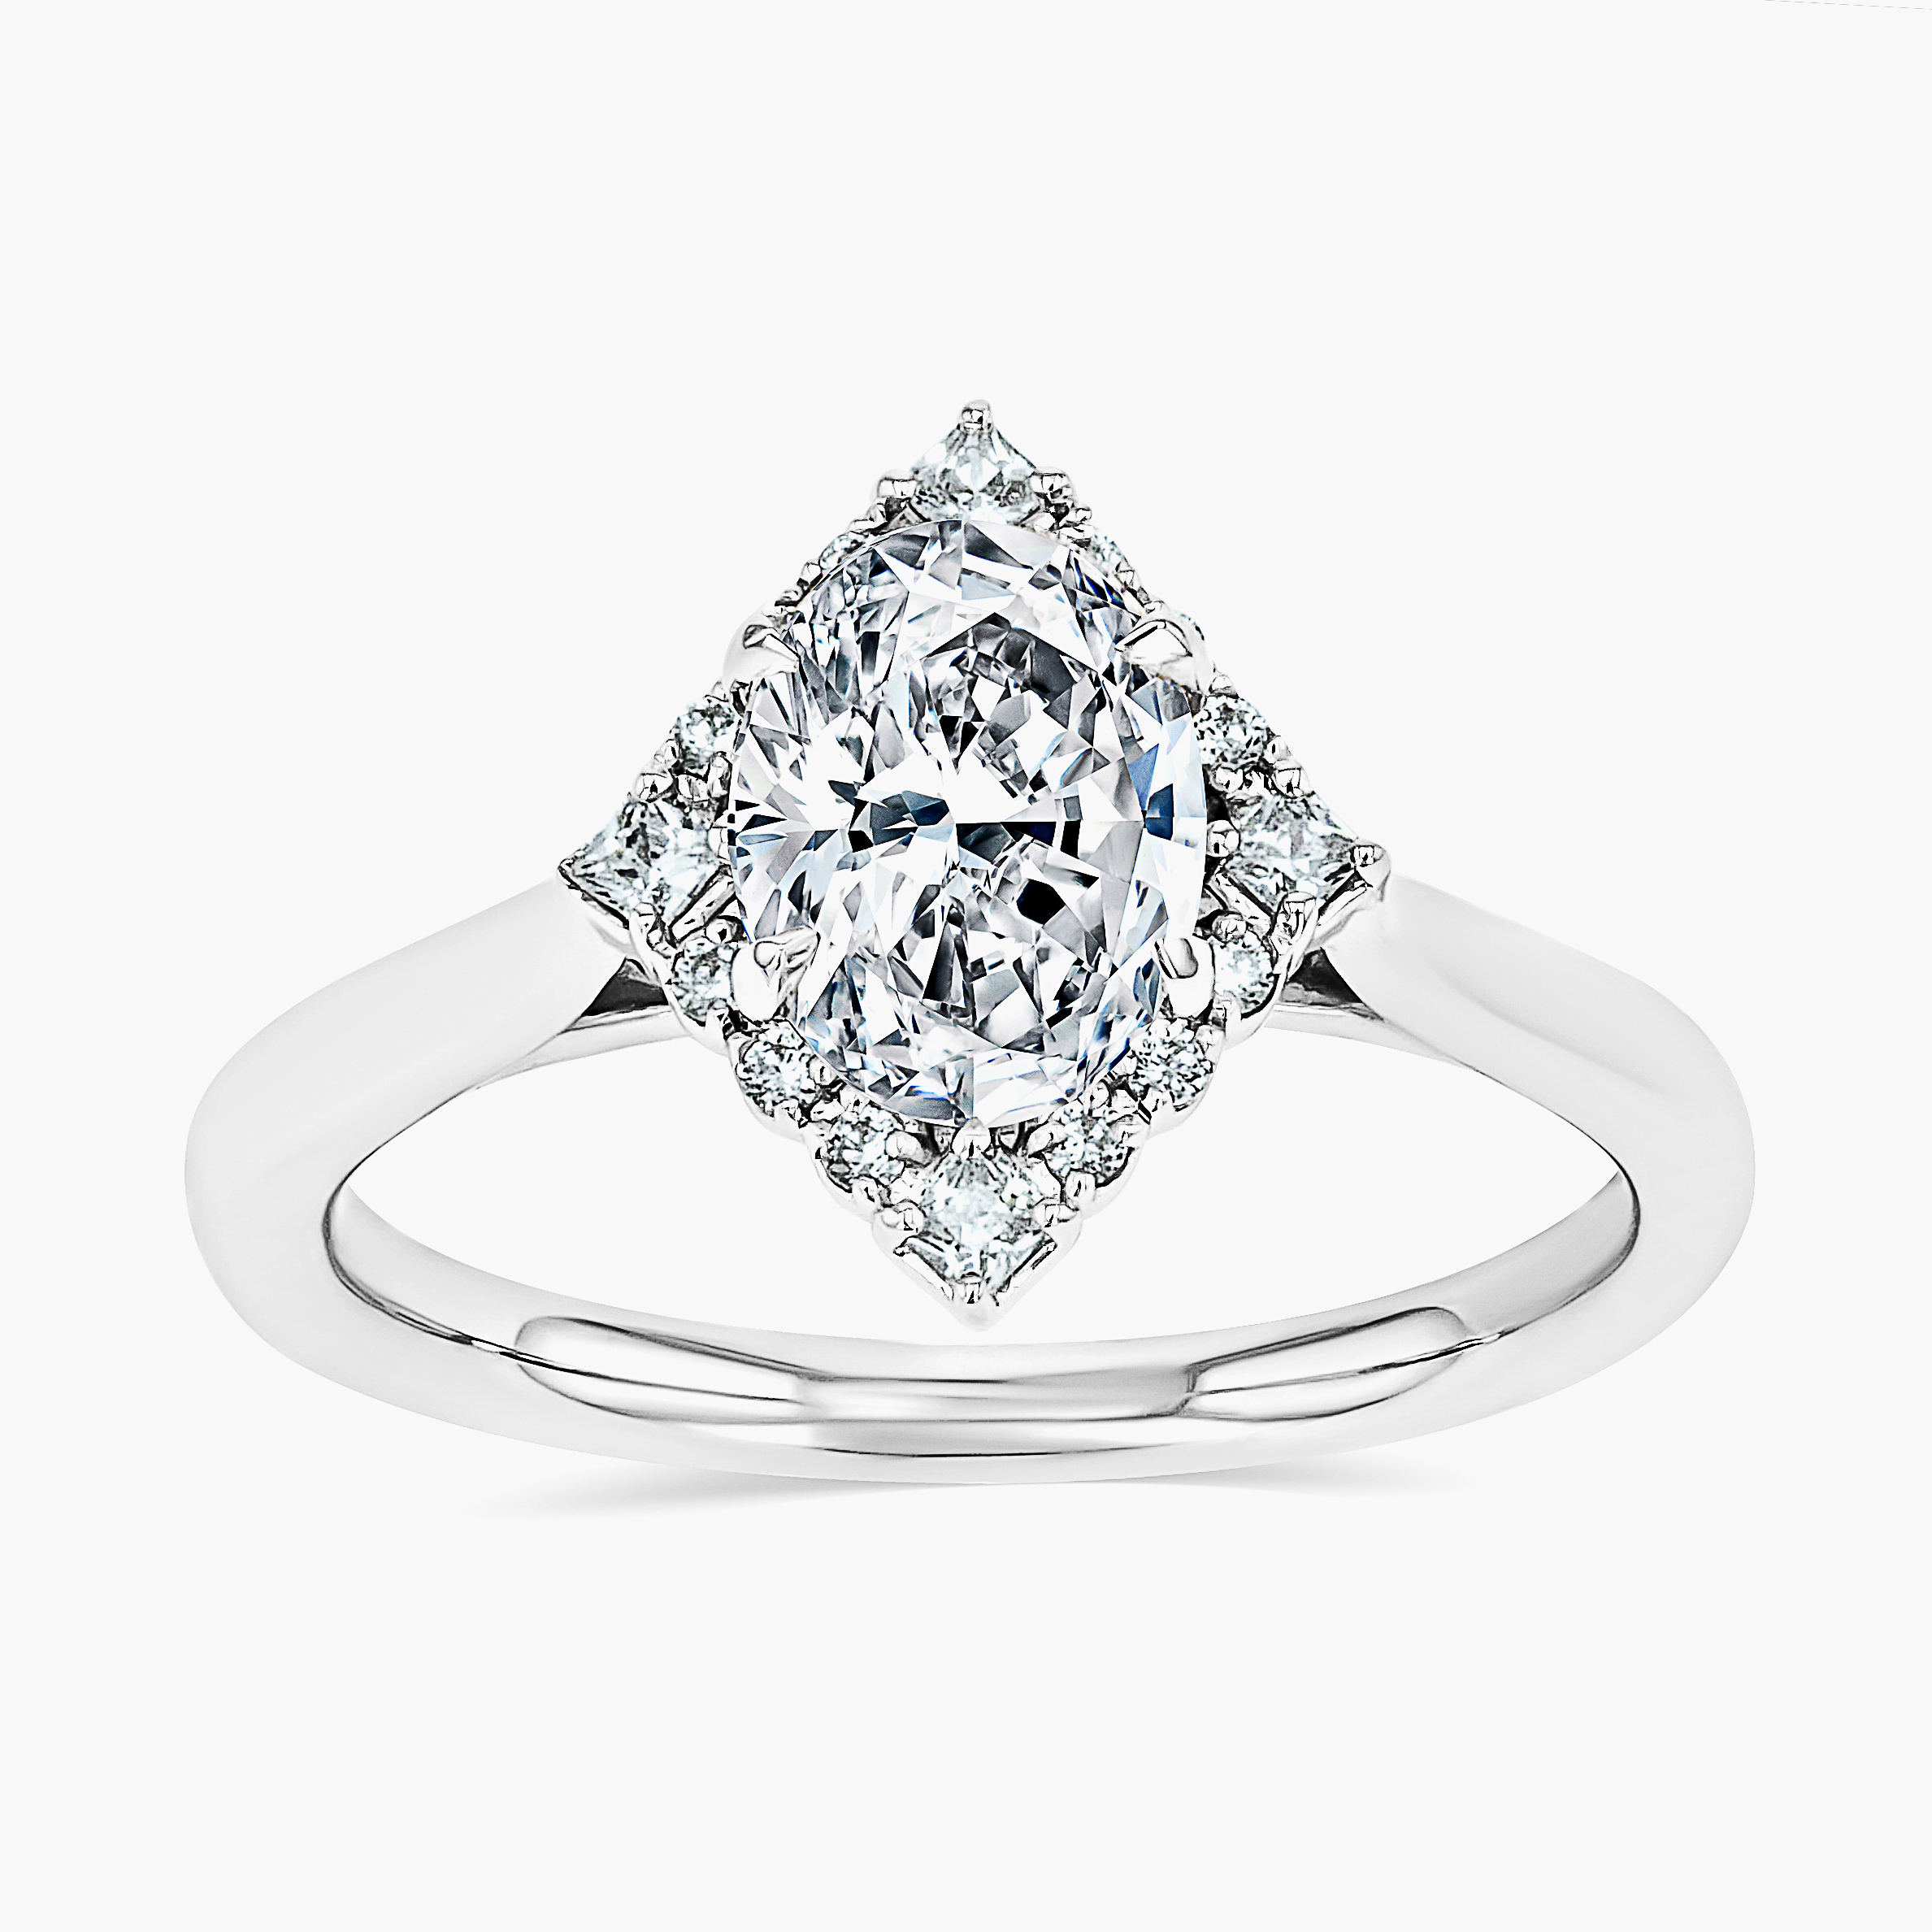 Miadonna's Starlight Engagement Ring